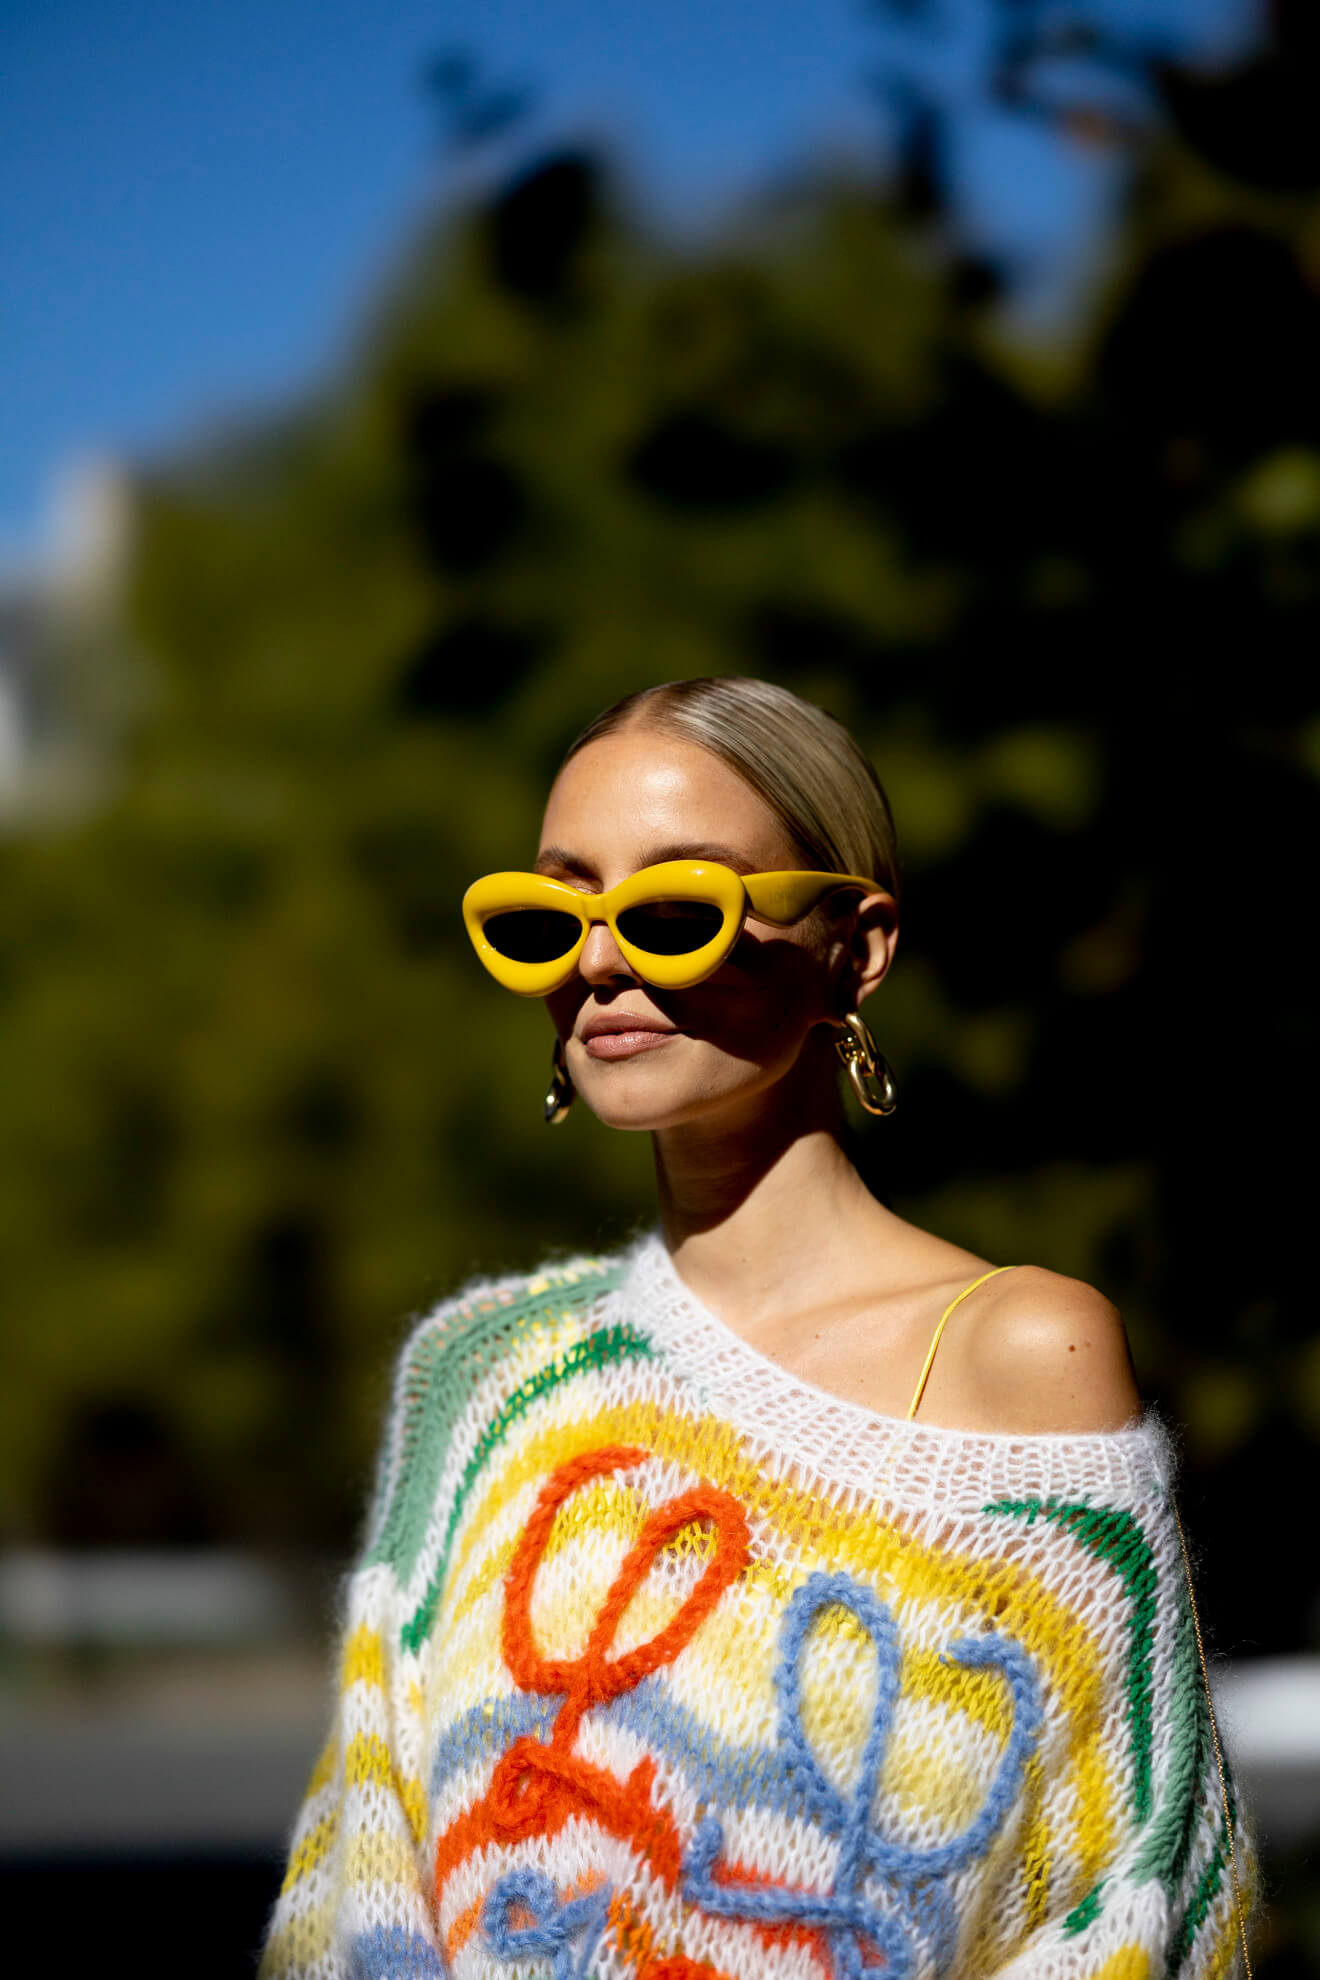 Leonie Hanne at paris fashion week wearing oversized sunglasses